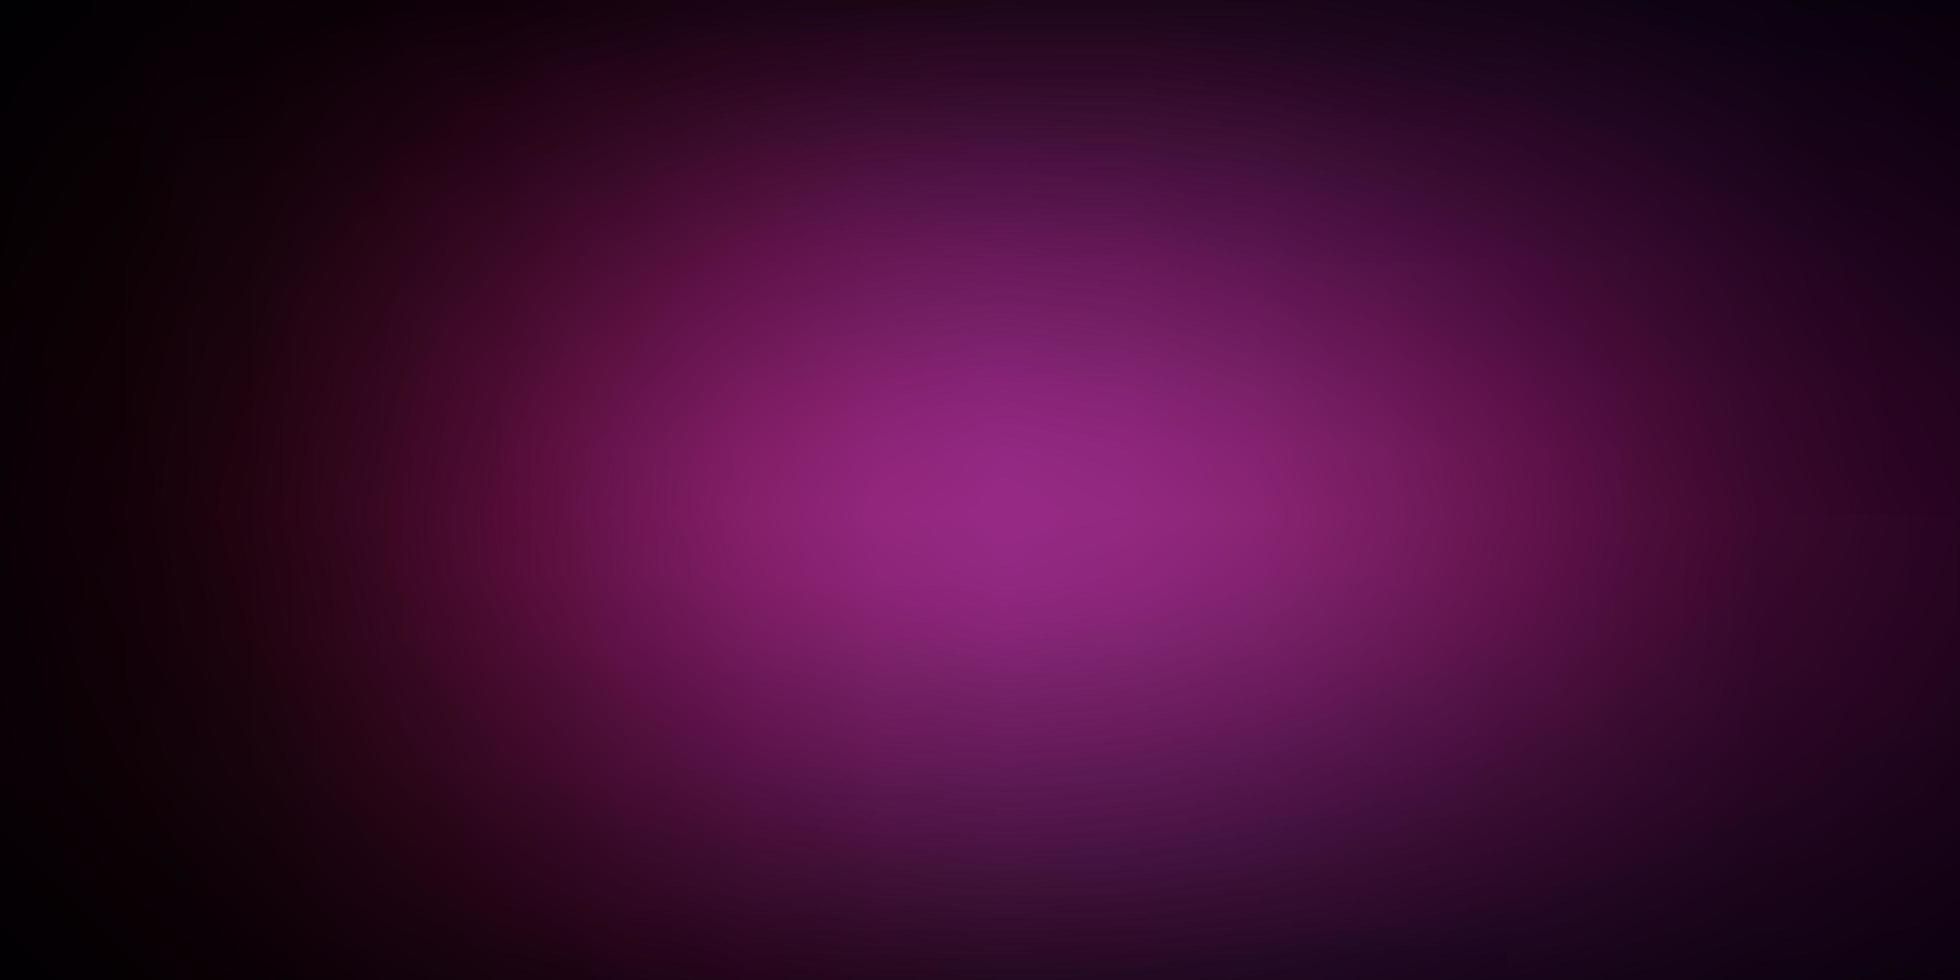 Fondo borroso abstracto del vector de color rosa oscuro, azul.